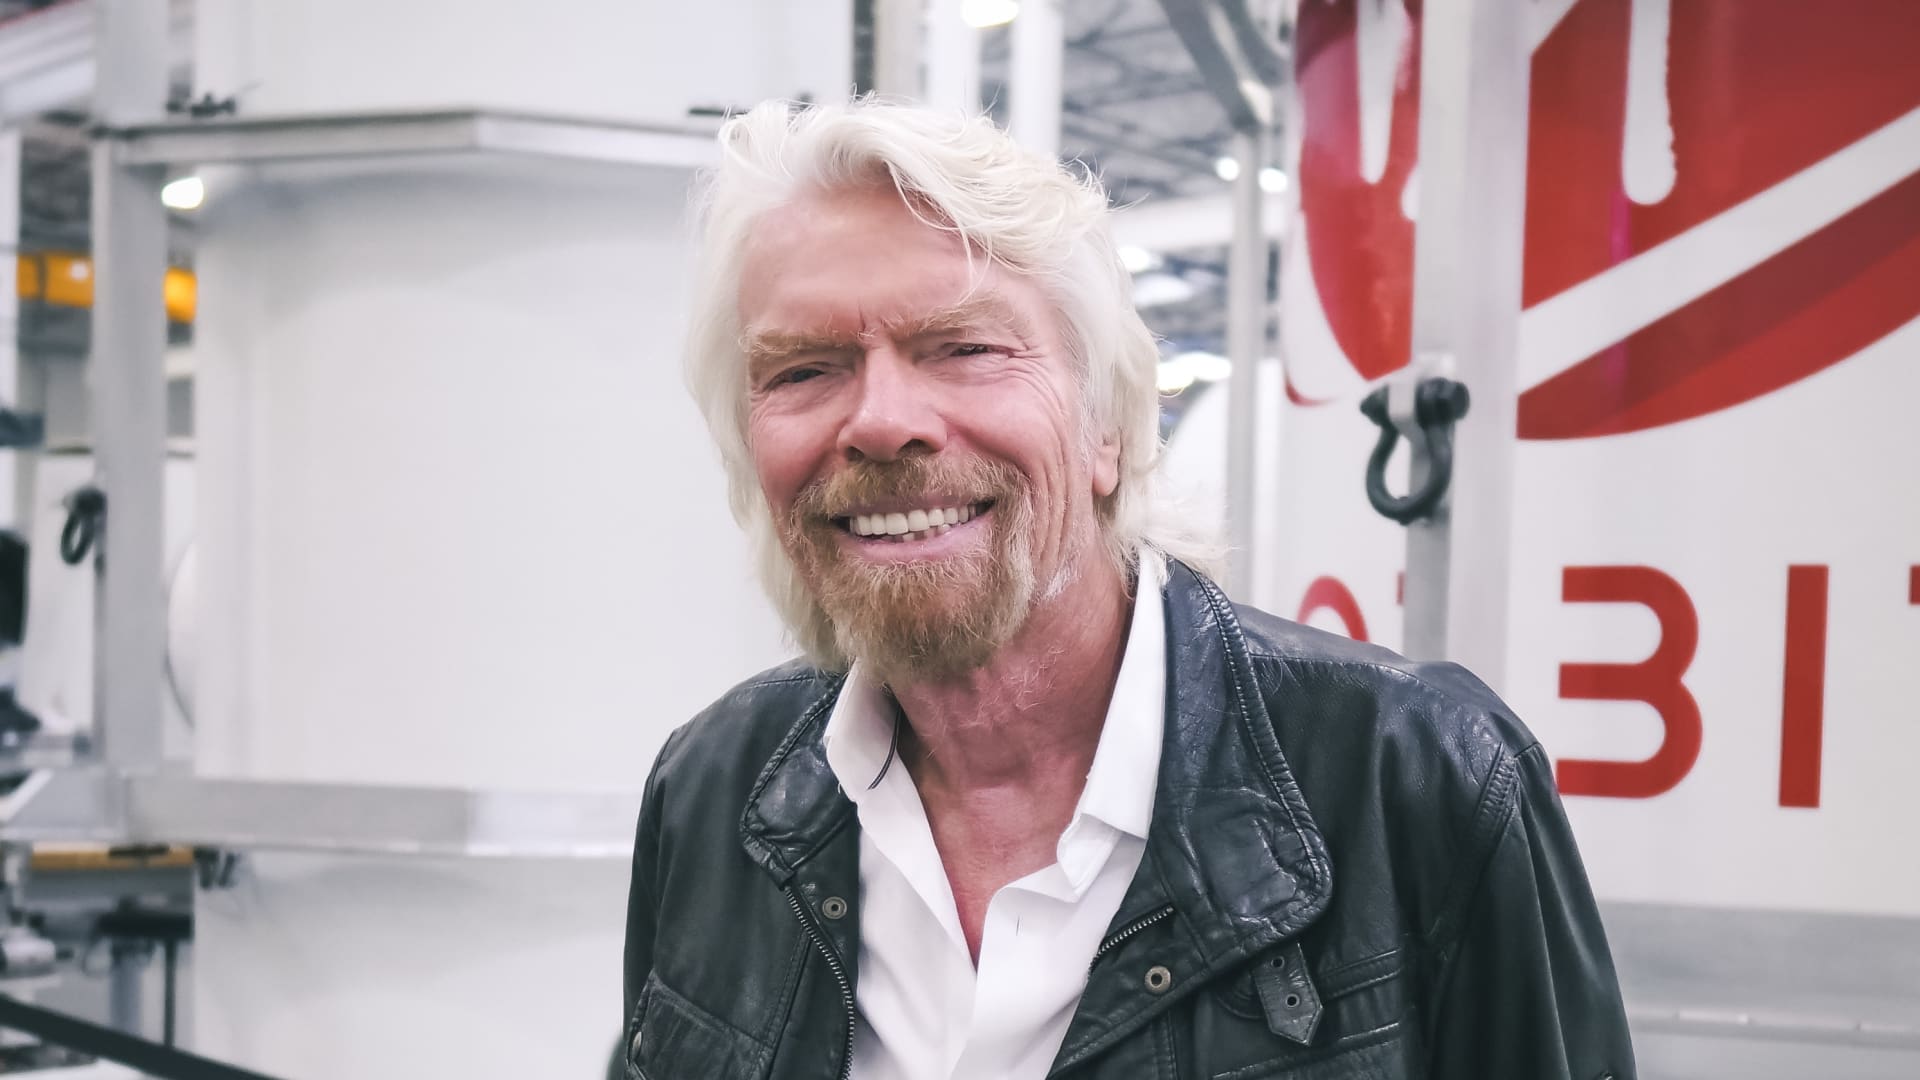 Sir Richard Branson poses in front of Virgin Orbit's rocket manufacturing.